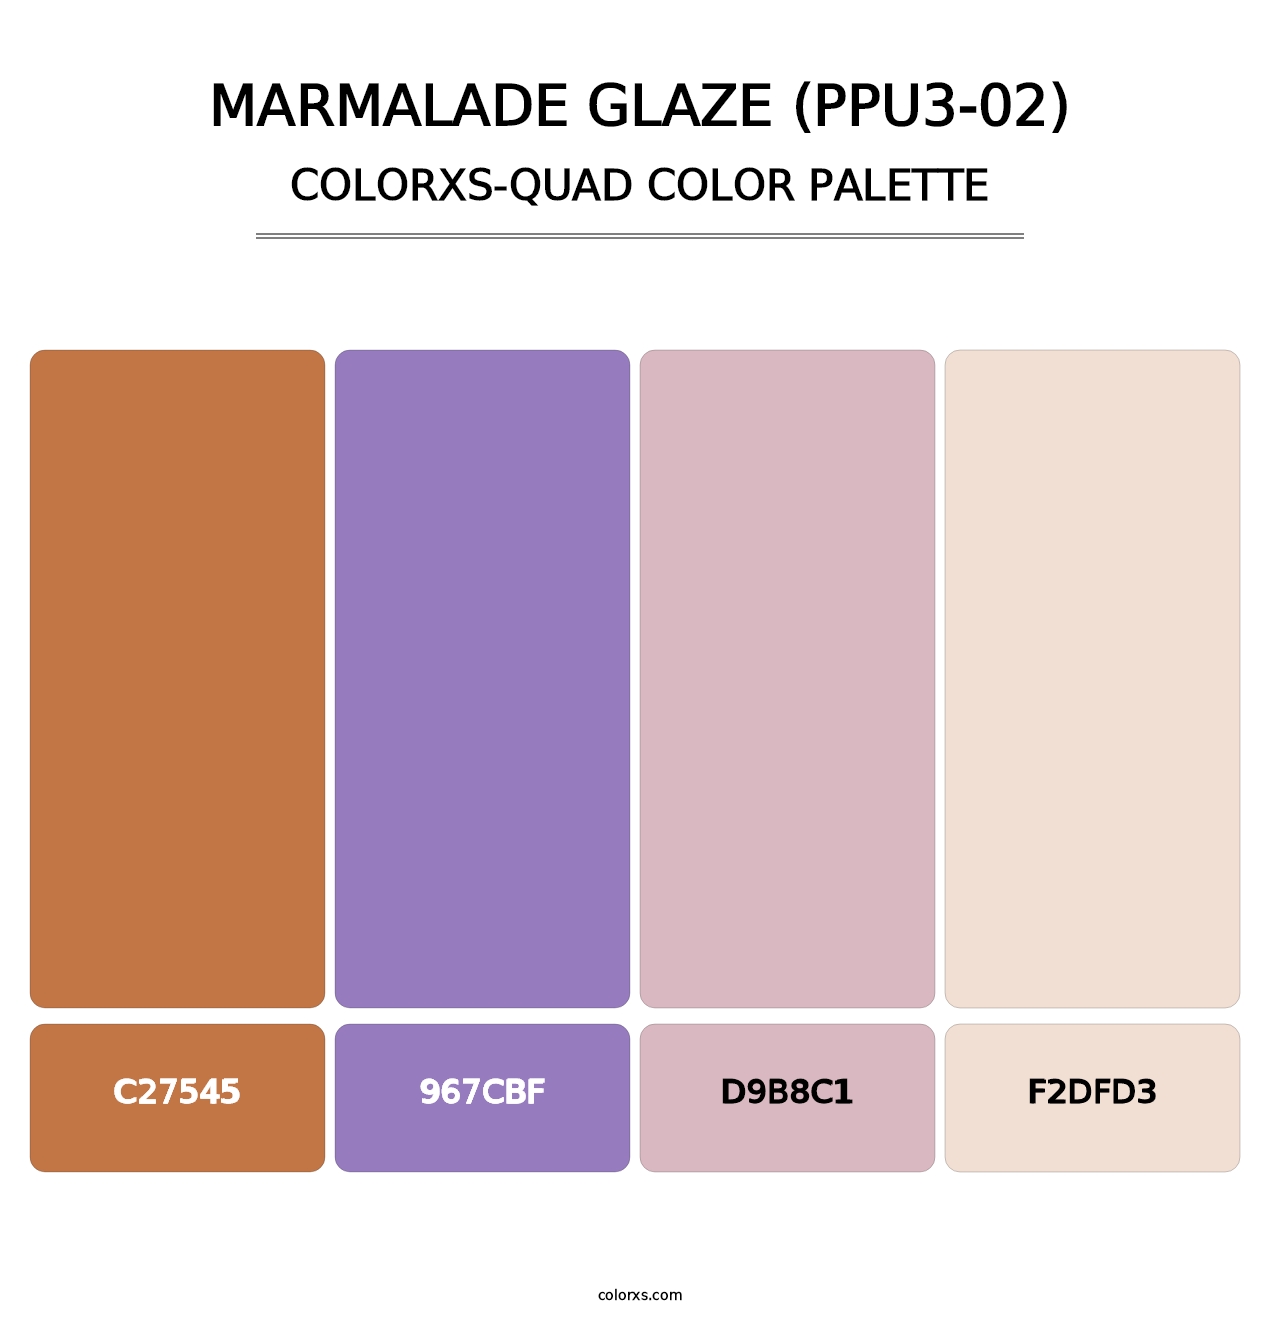 Marmalade Glaze (PPU3-02) - Colorxs Quad Palette